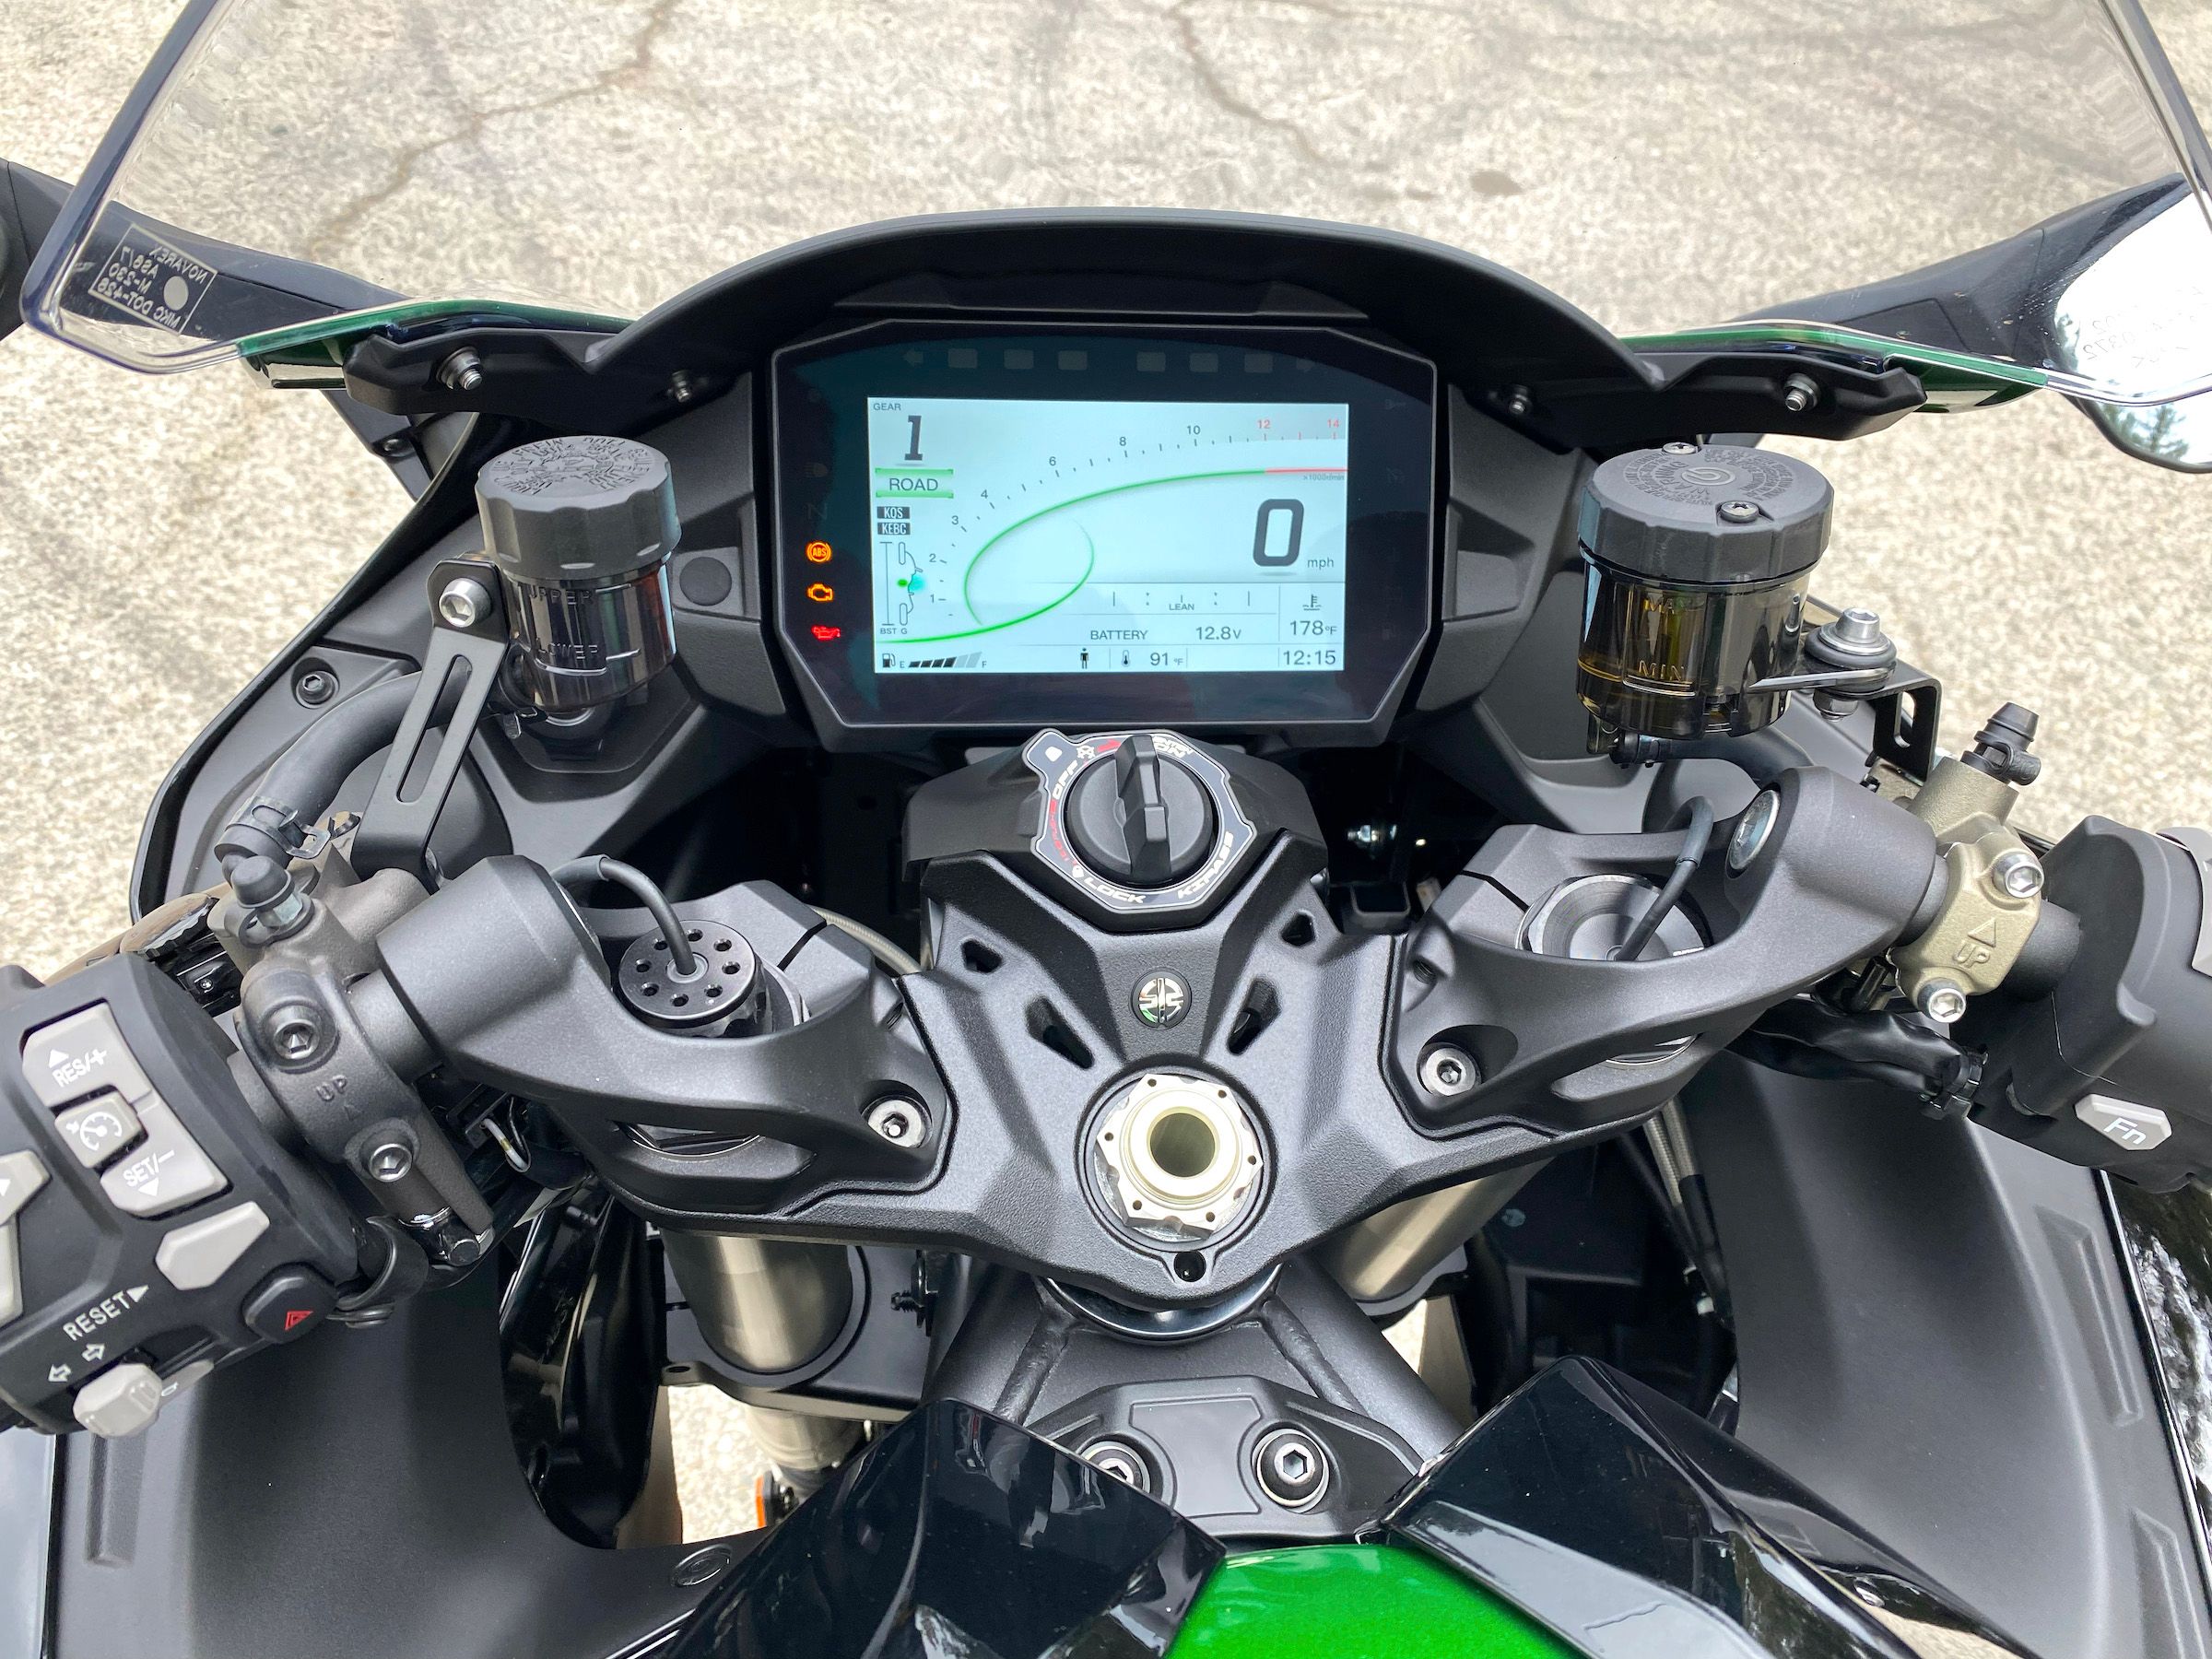 2022 Kawasaki Ninja H2 SX SE gets new 6.5-ich TFT